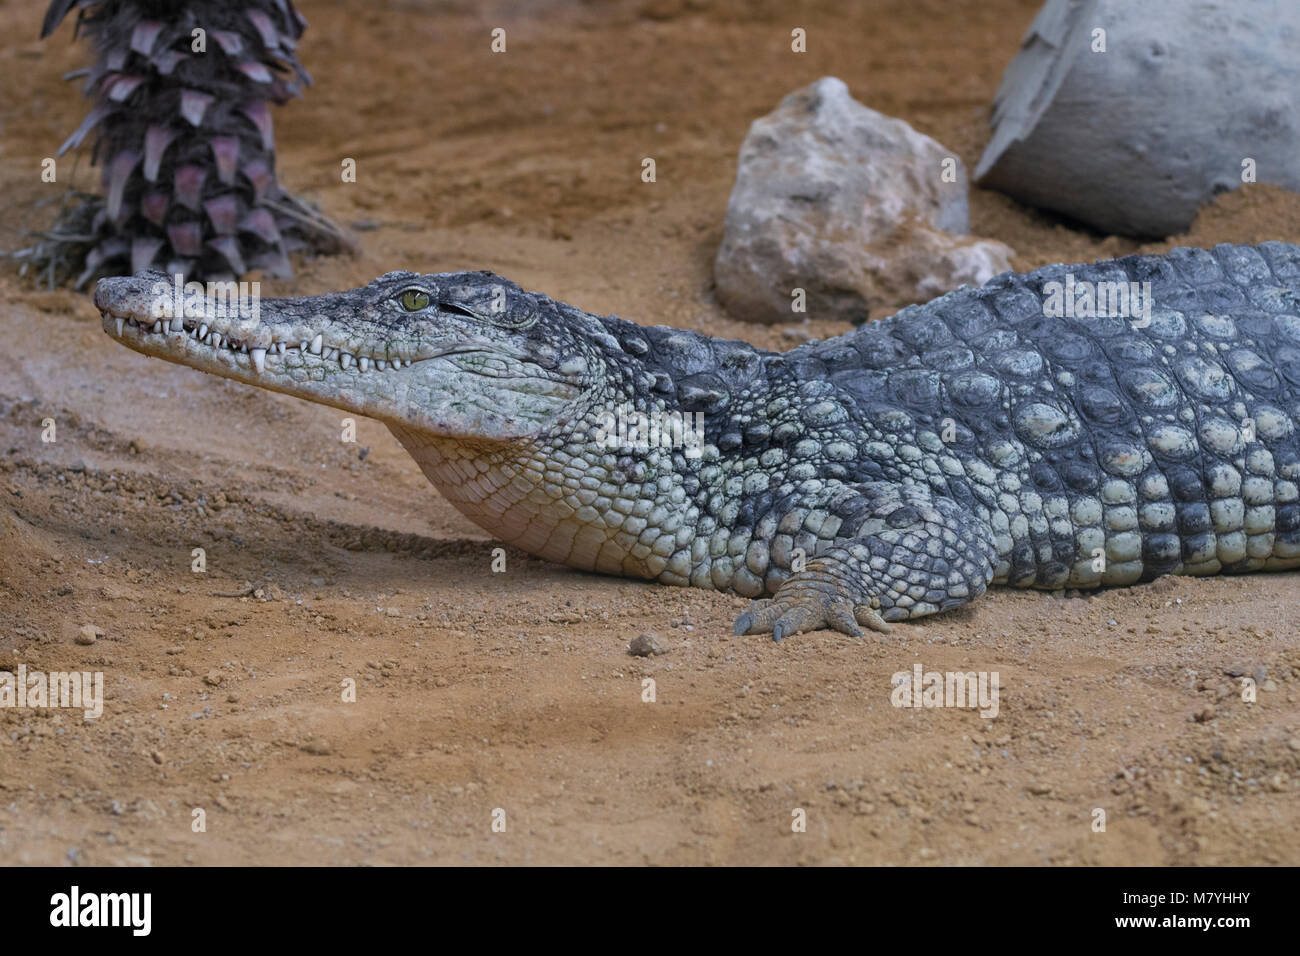 Female niles crocodile resting in the sand Stock Photo